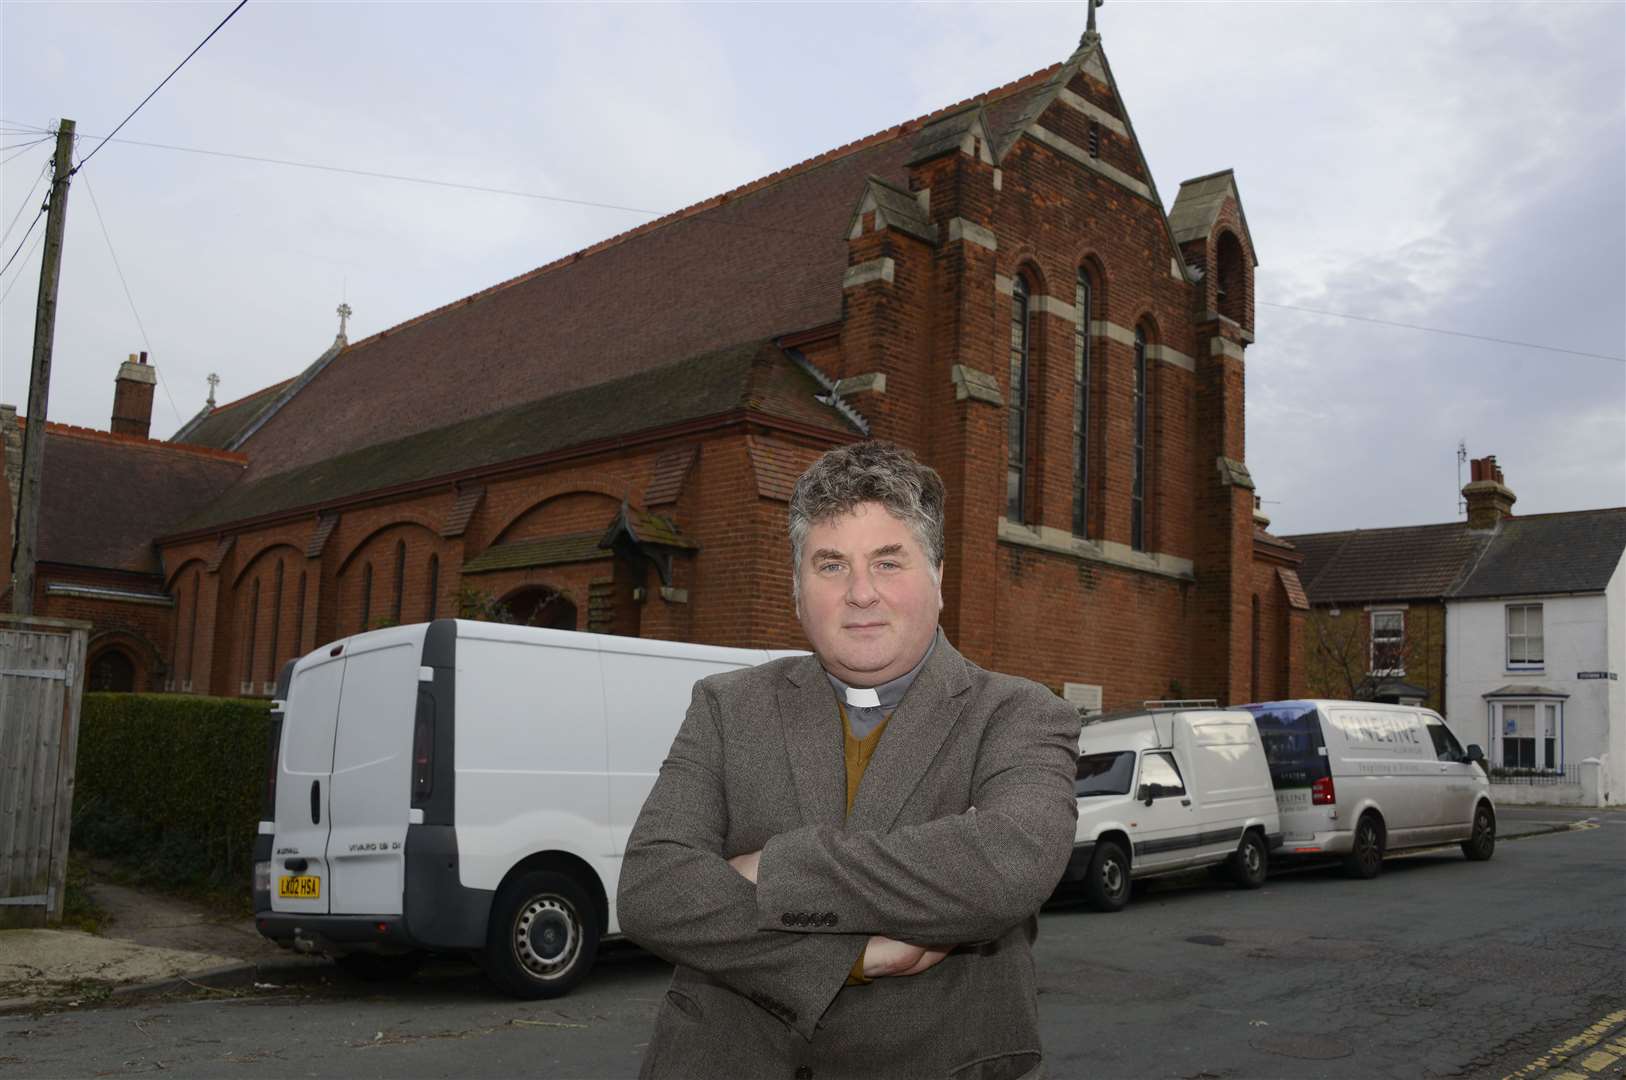 Rev Simon Tillotson said it was "unhygienic". Picture: Paul Amos